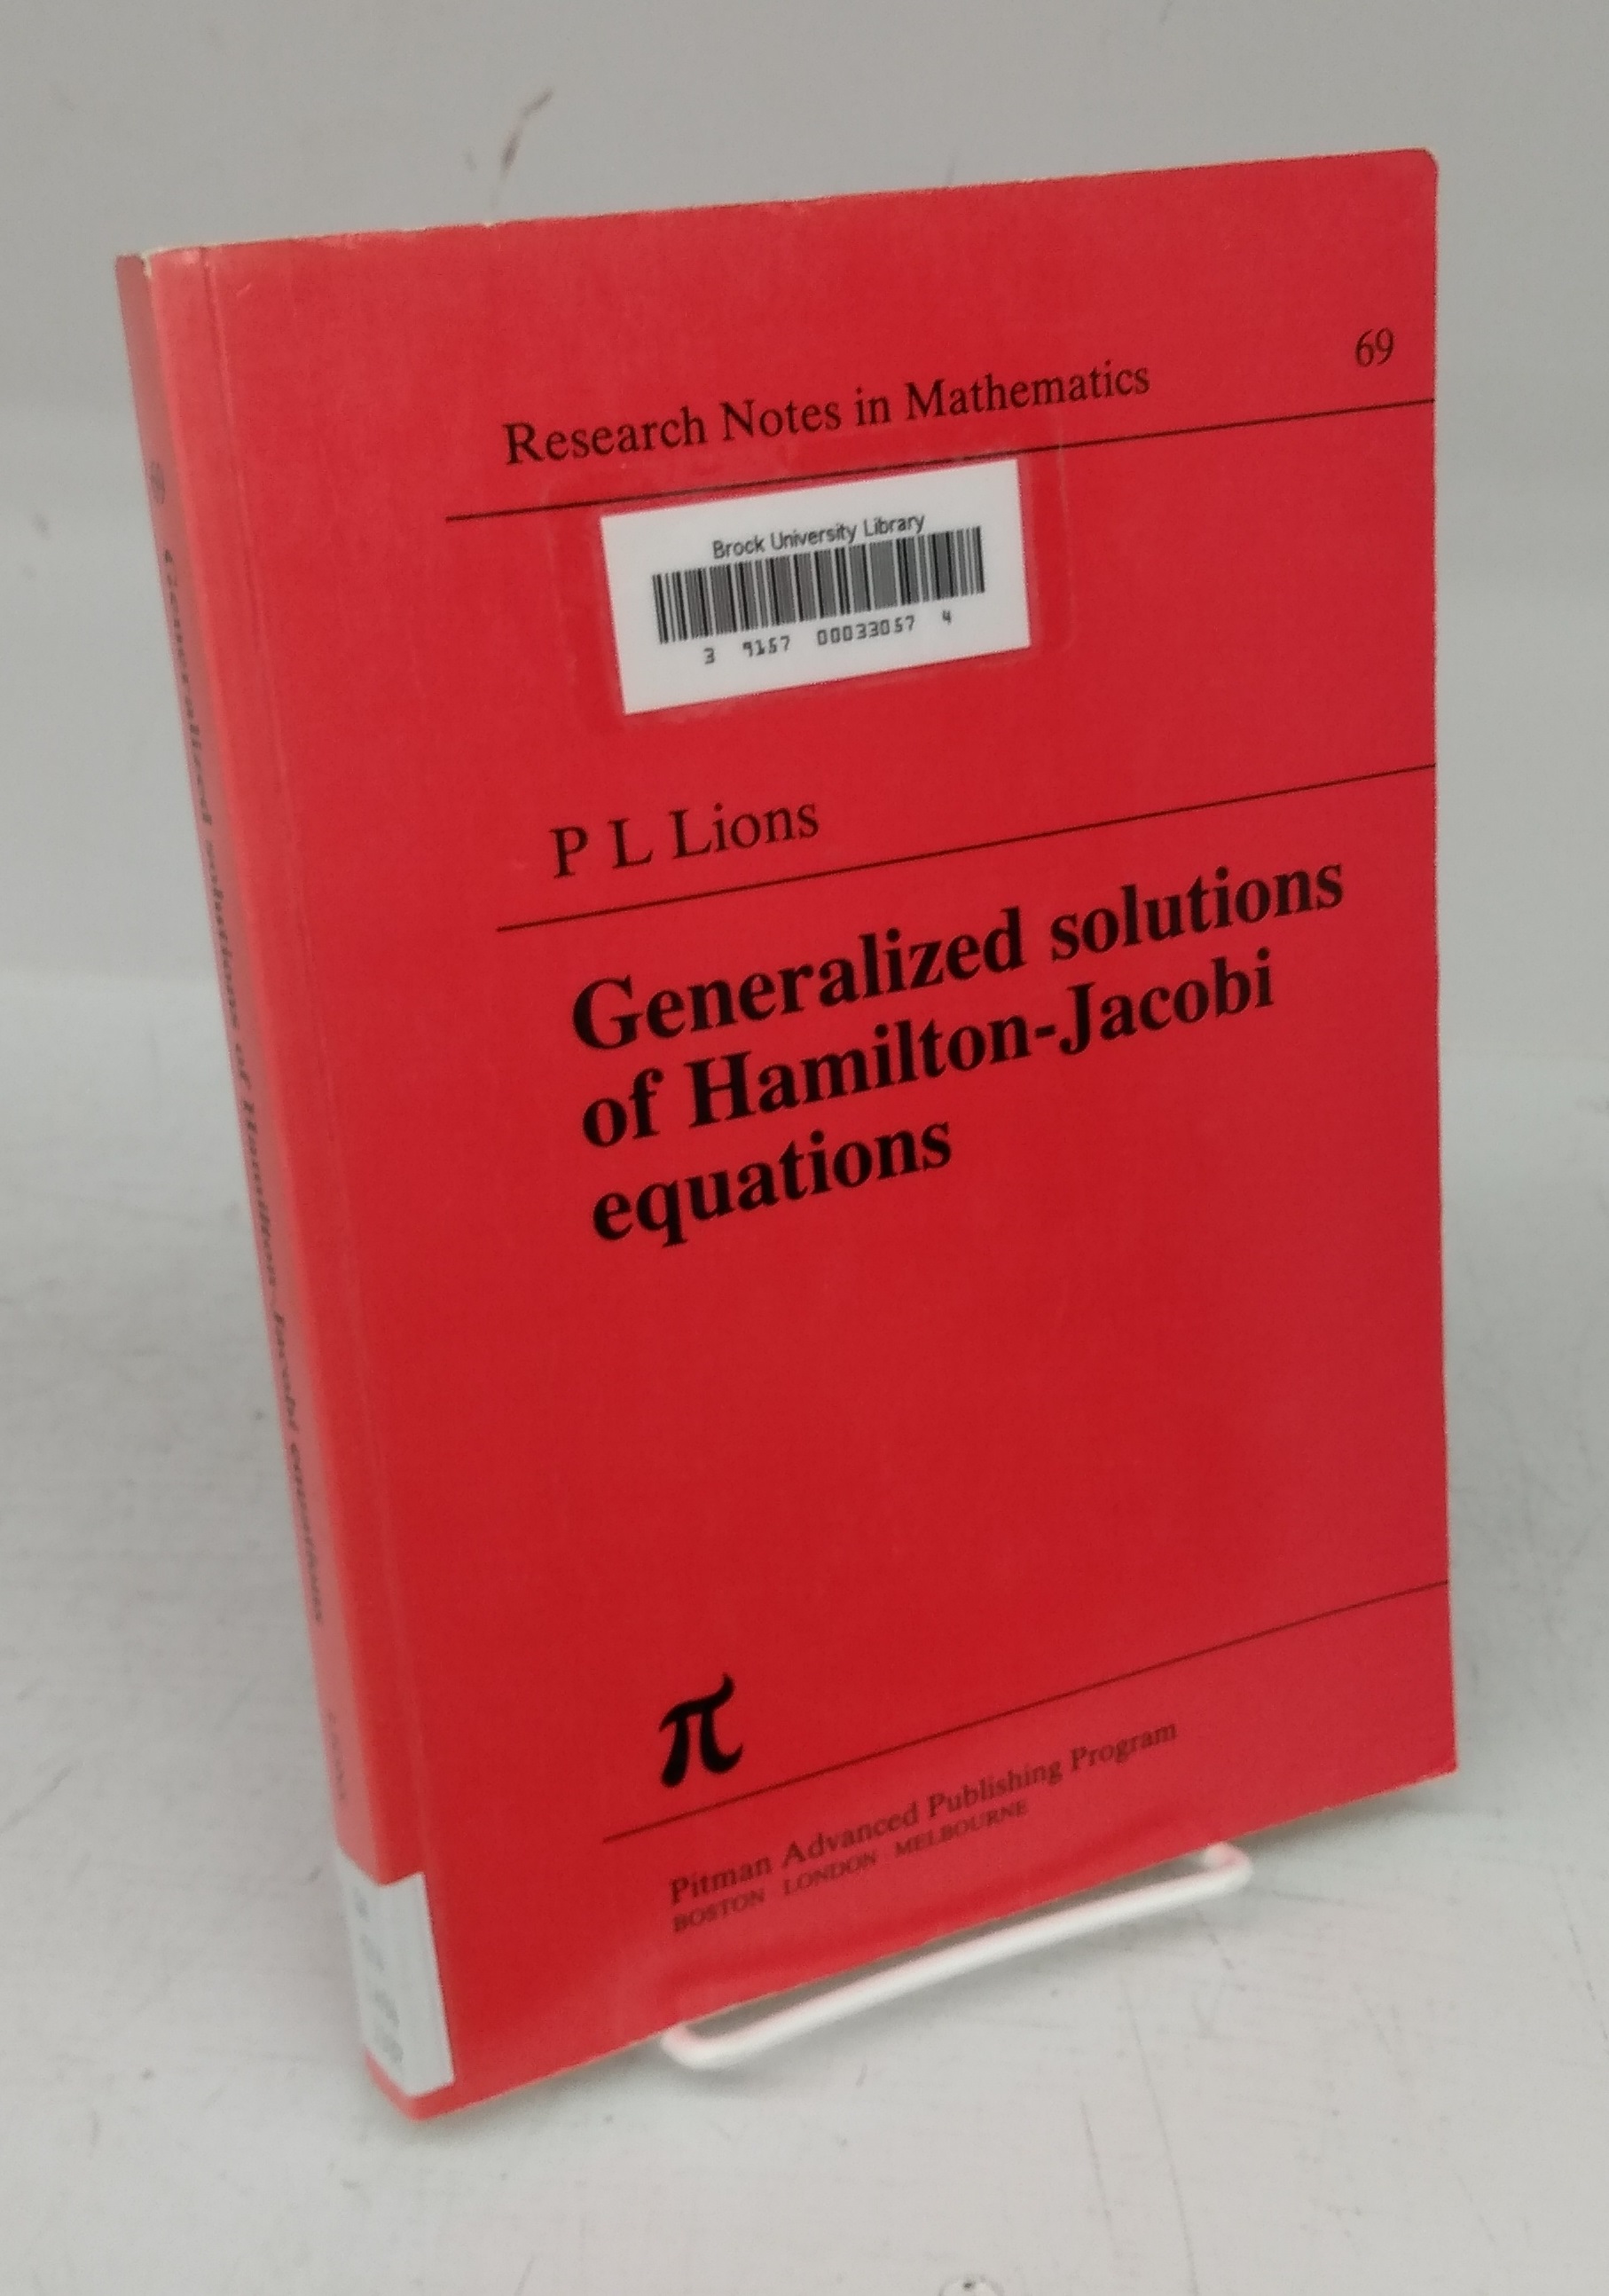 Generalized solutions of Hamilton-Jacobi equations - LIONS, P. L.